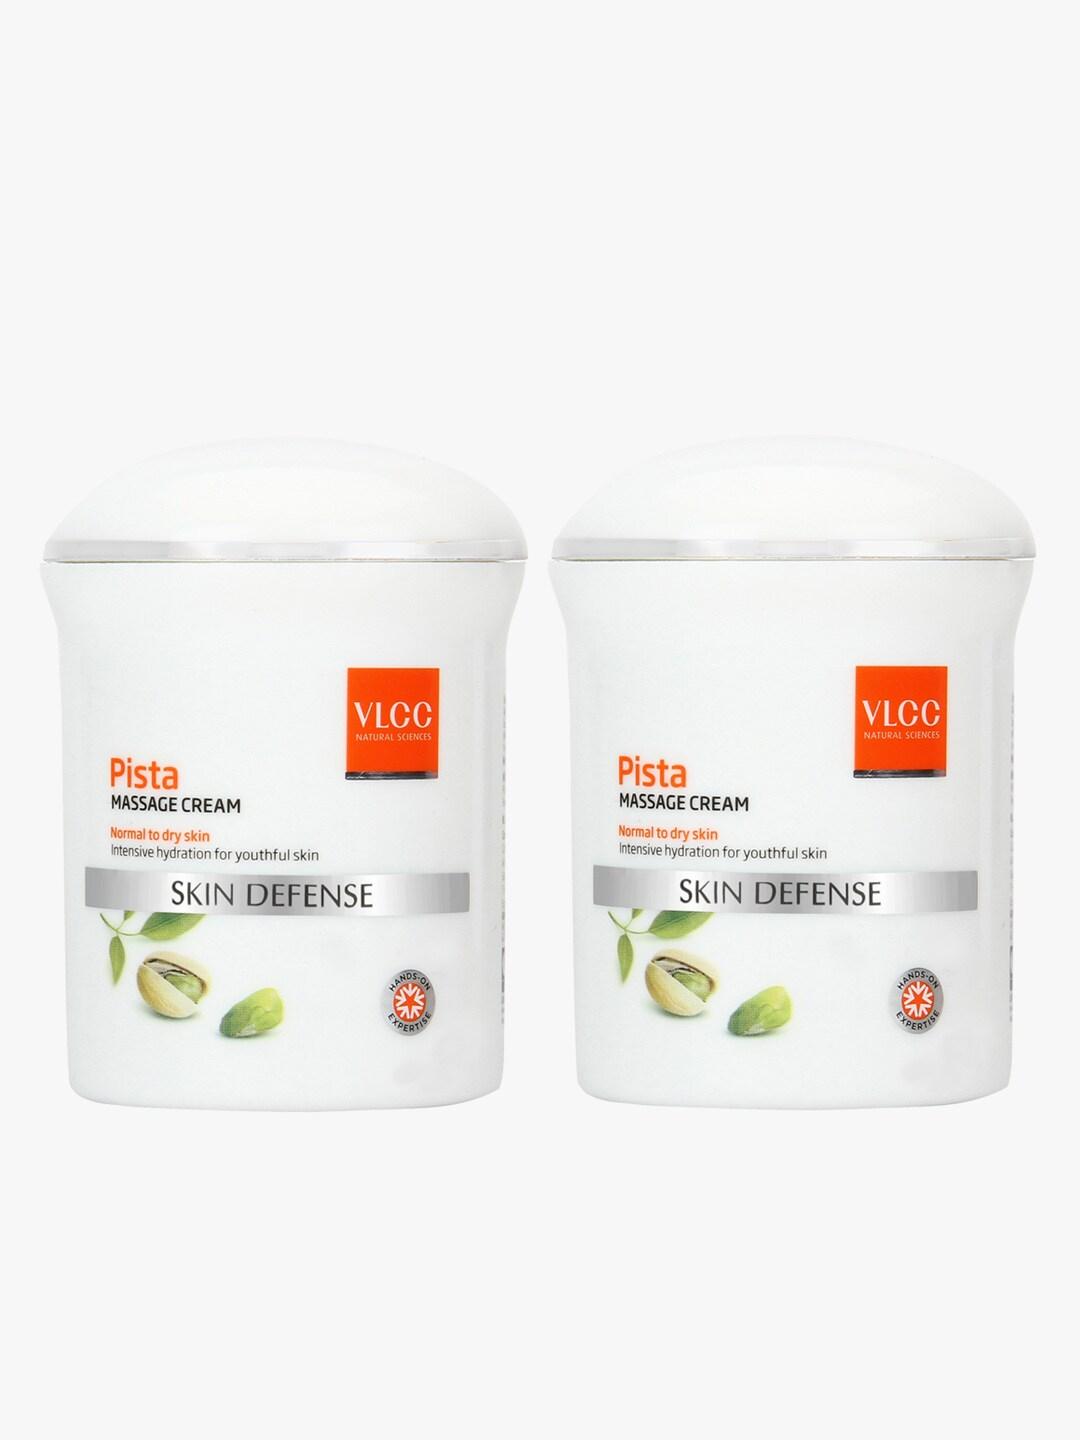 VLCC Set of 3 Skin Defense Pista Massage Cream for Normal to Dry Skin - 50g each